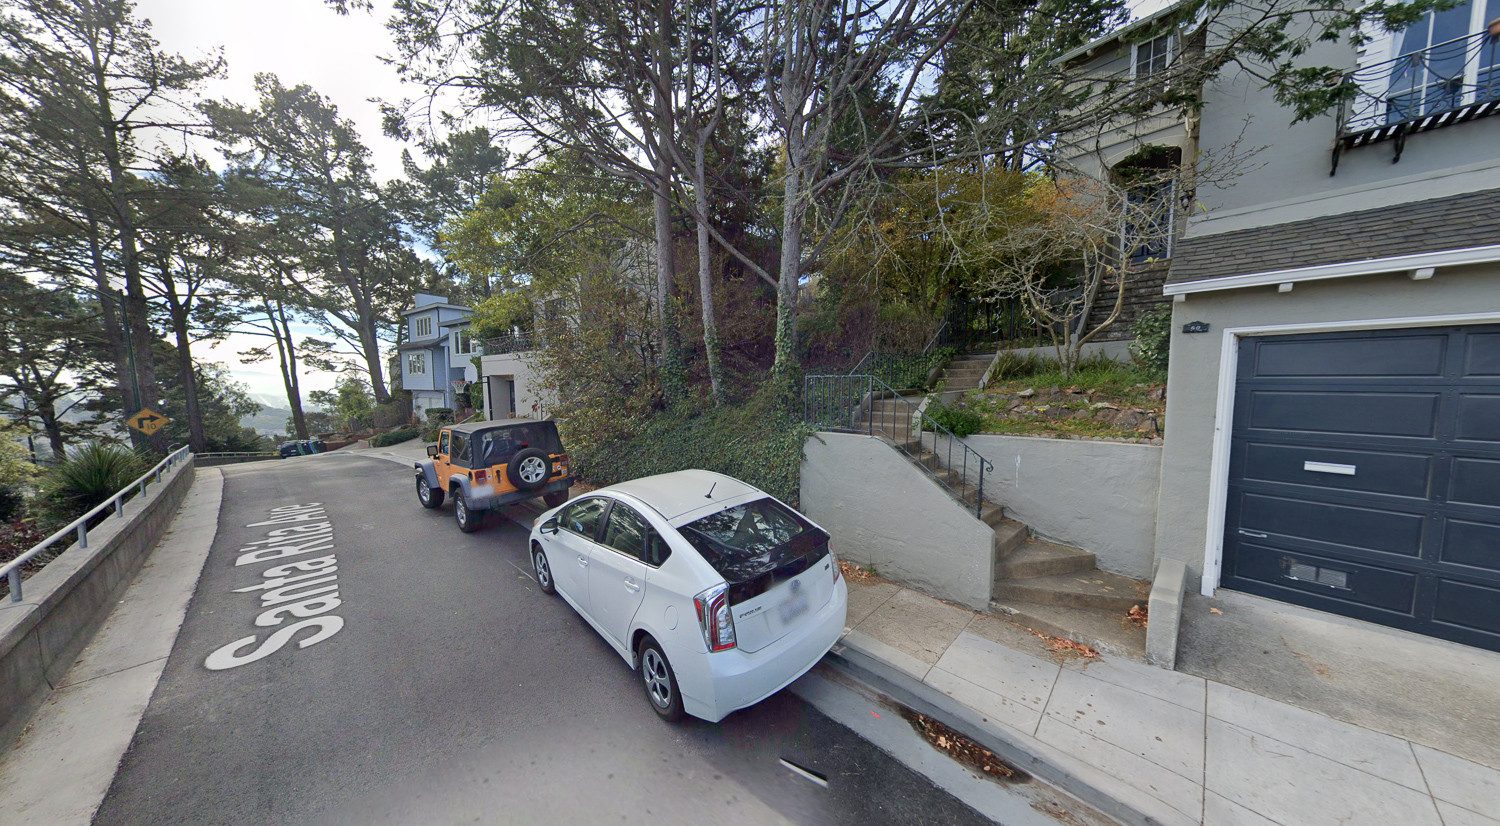 64 Santa Rita Avenue between two single-family structures, image via Google Street View